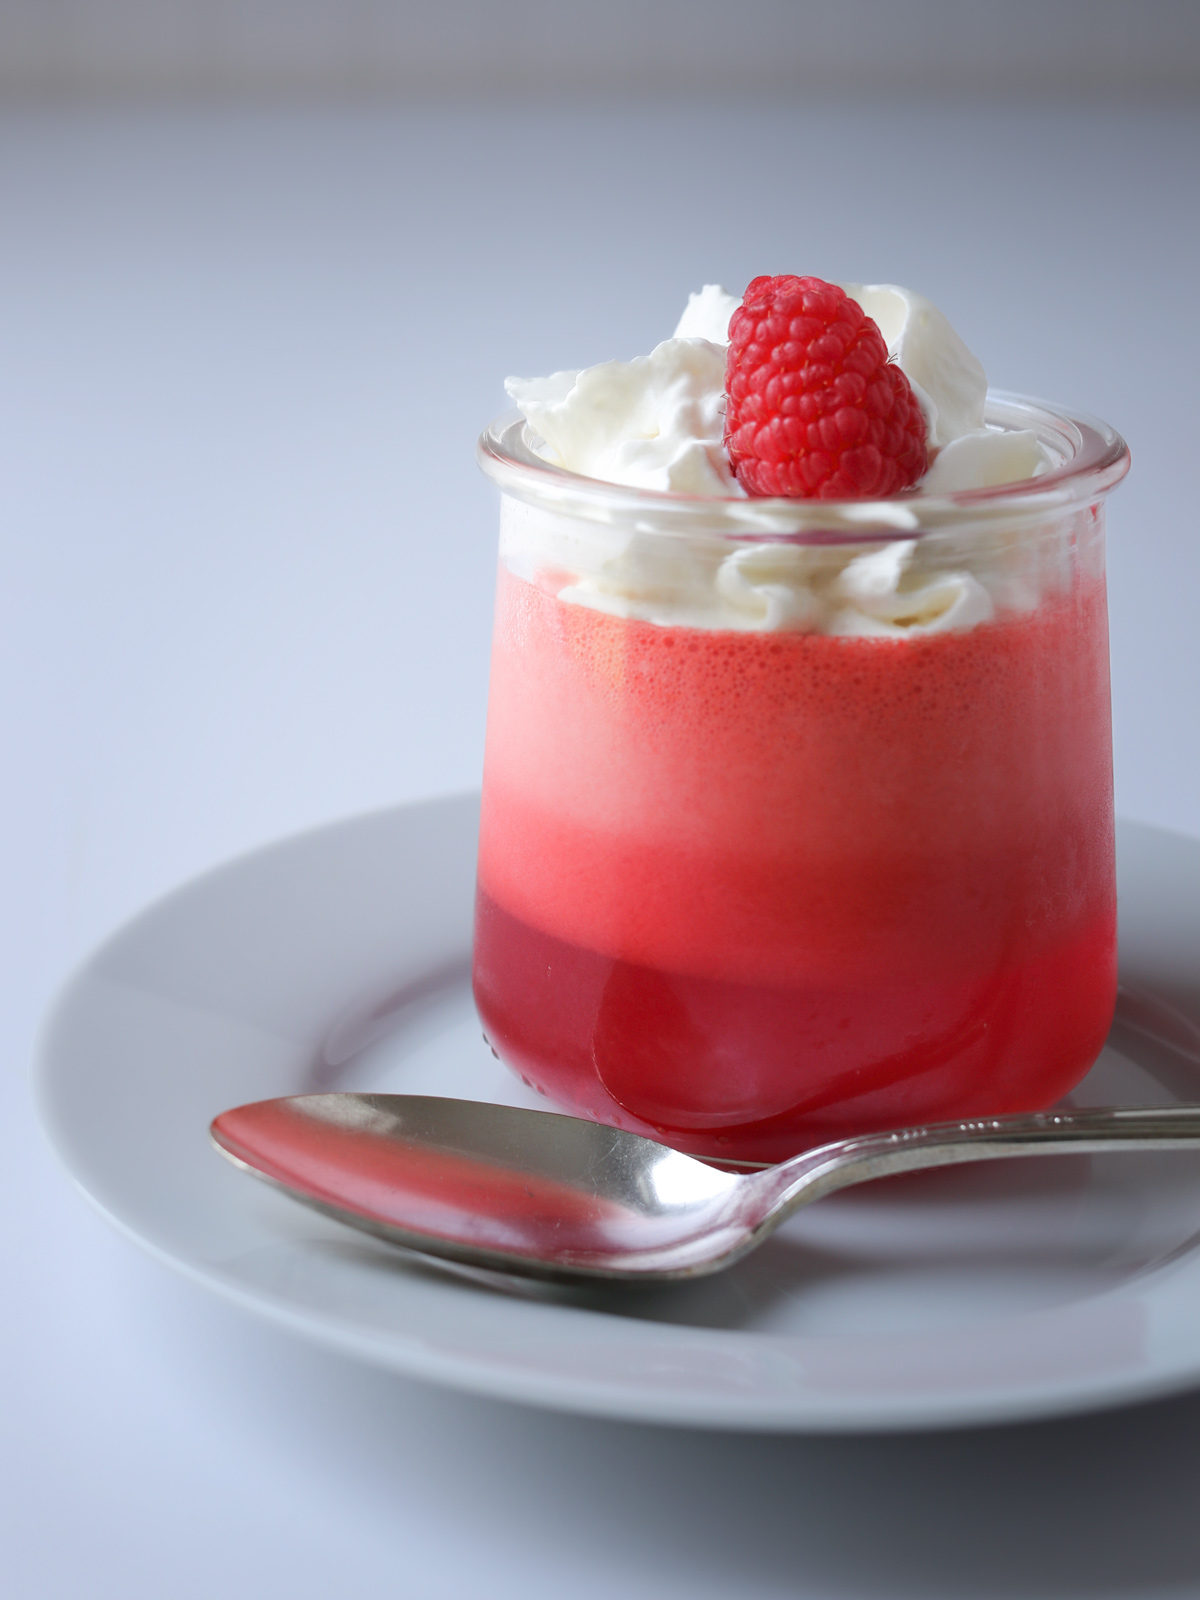 layered raspberry jello in glass ramekin on white plate, with spoon.